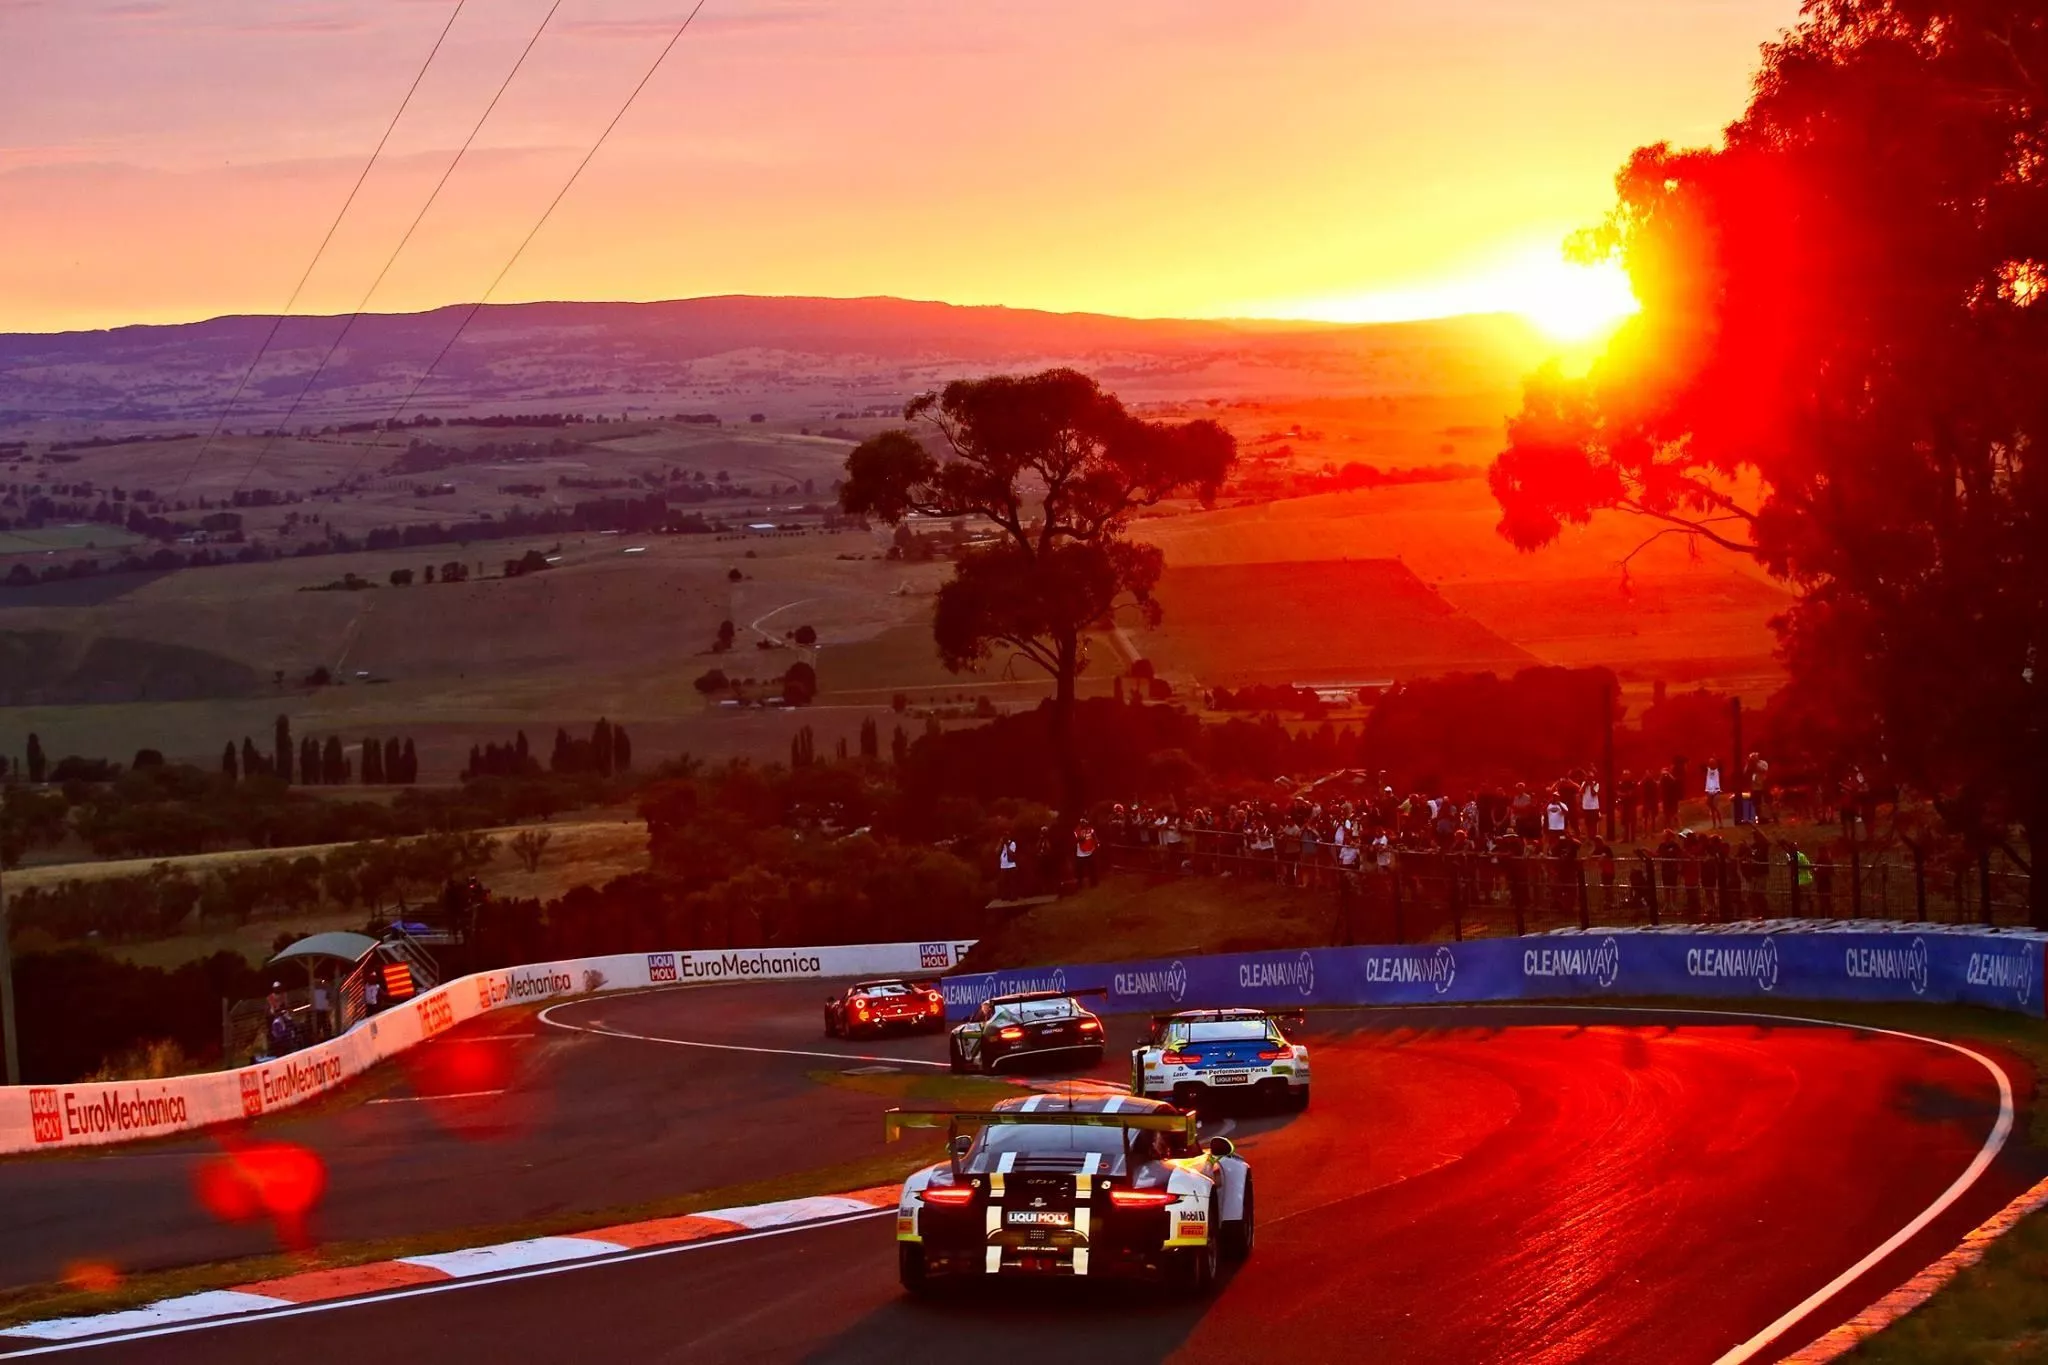 Mount Panorama Circuit in Australia, Australia and Oceania | Racing - Rated 4.1